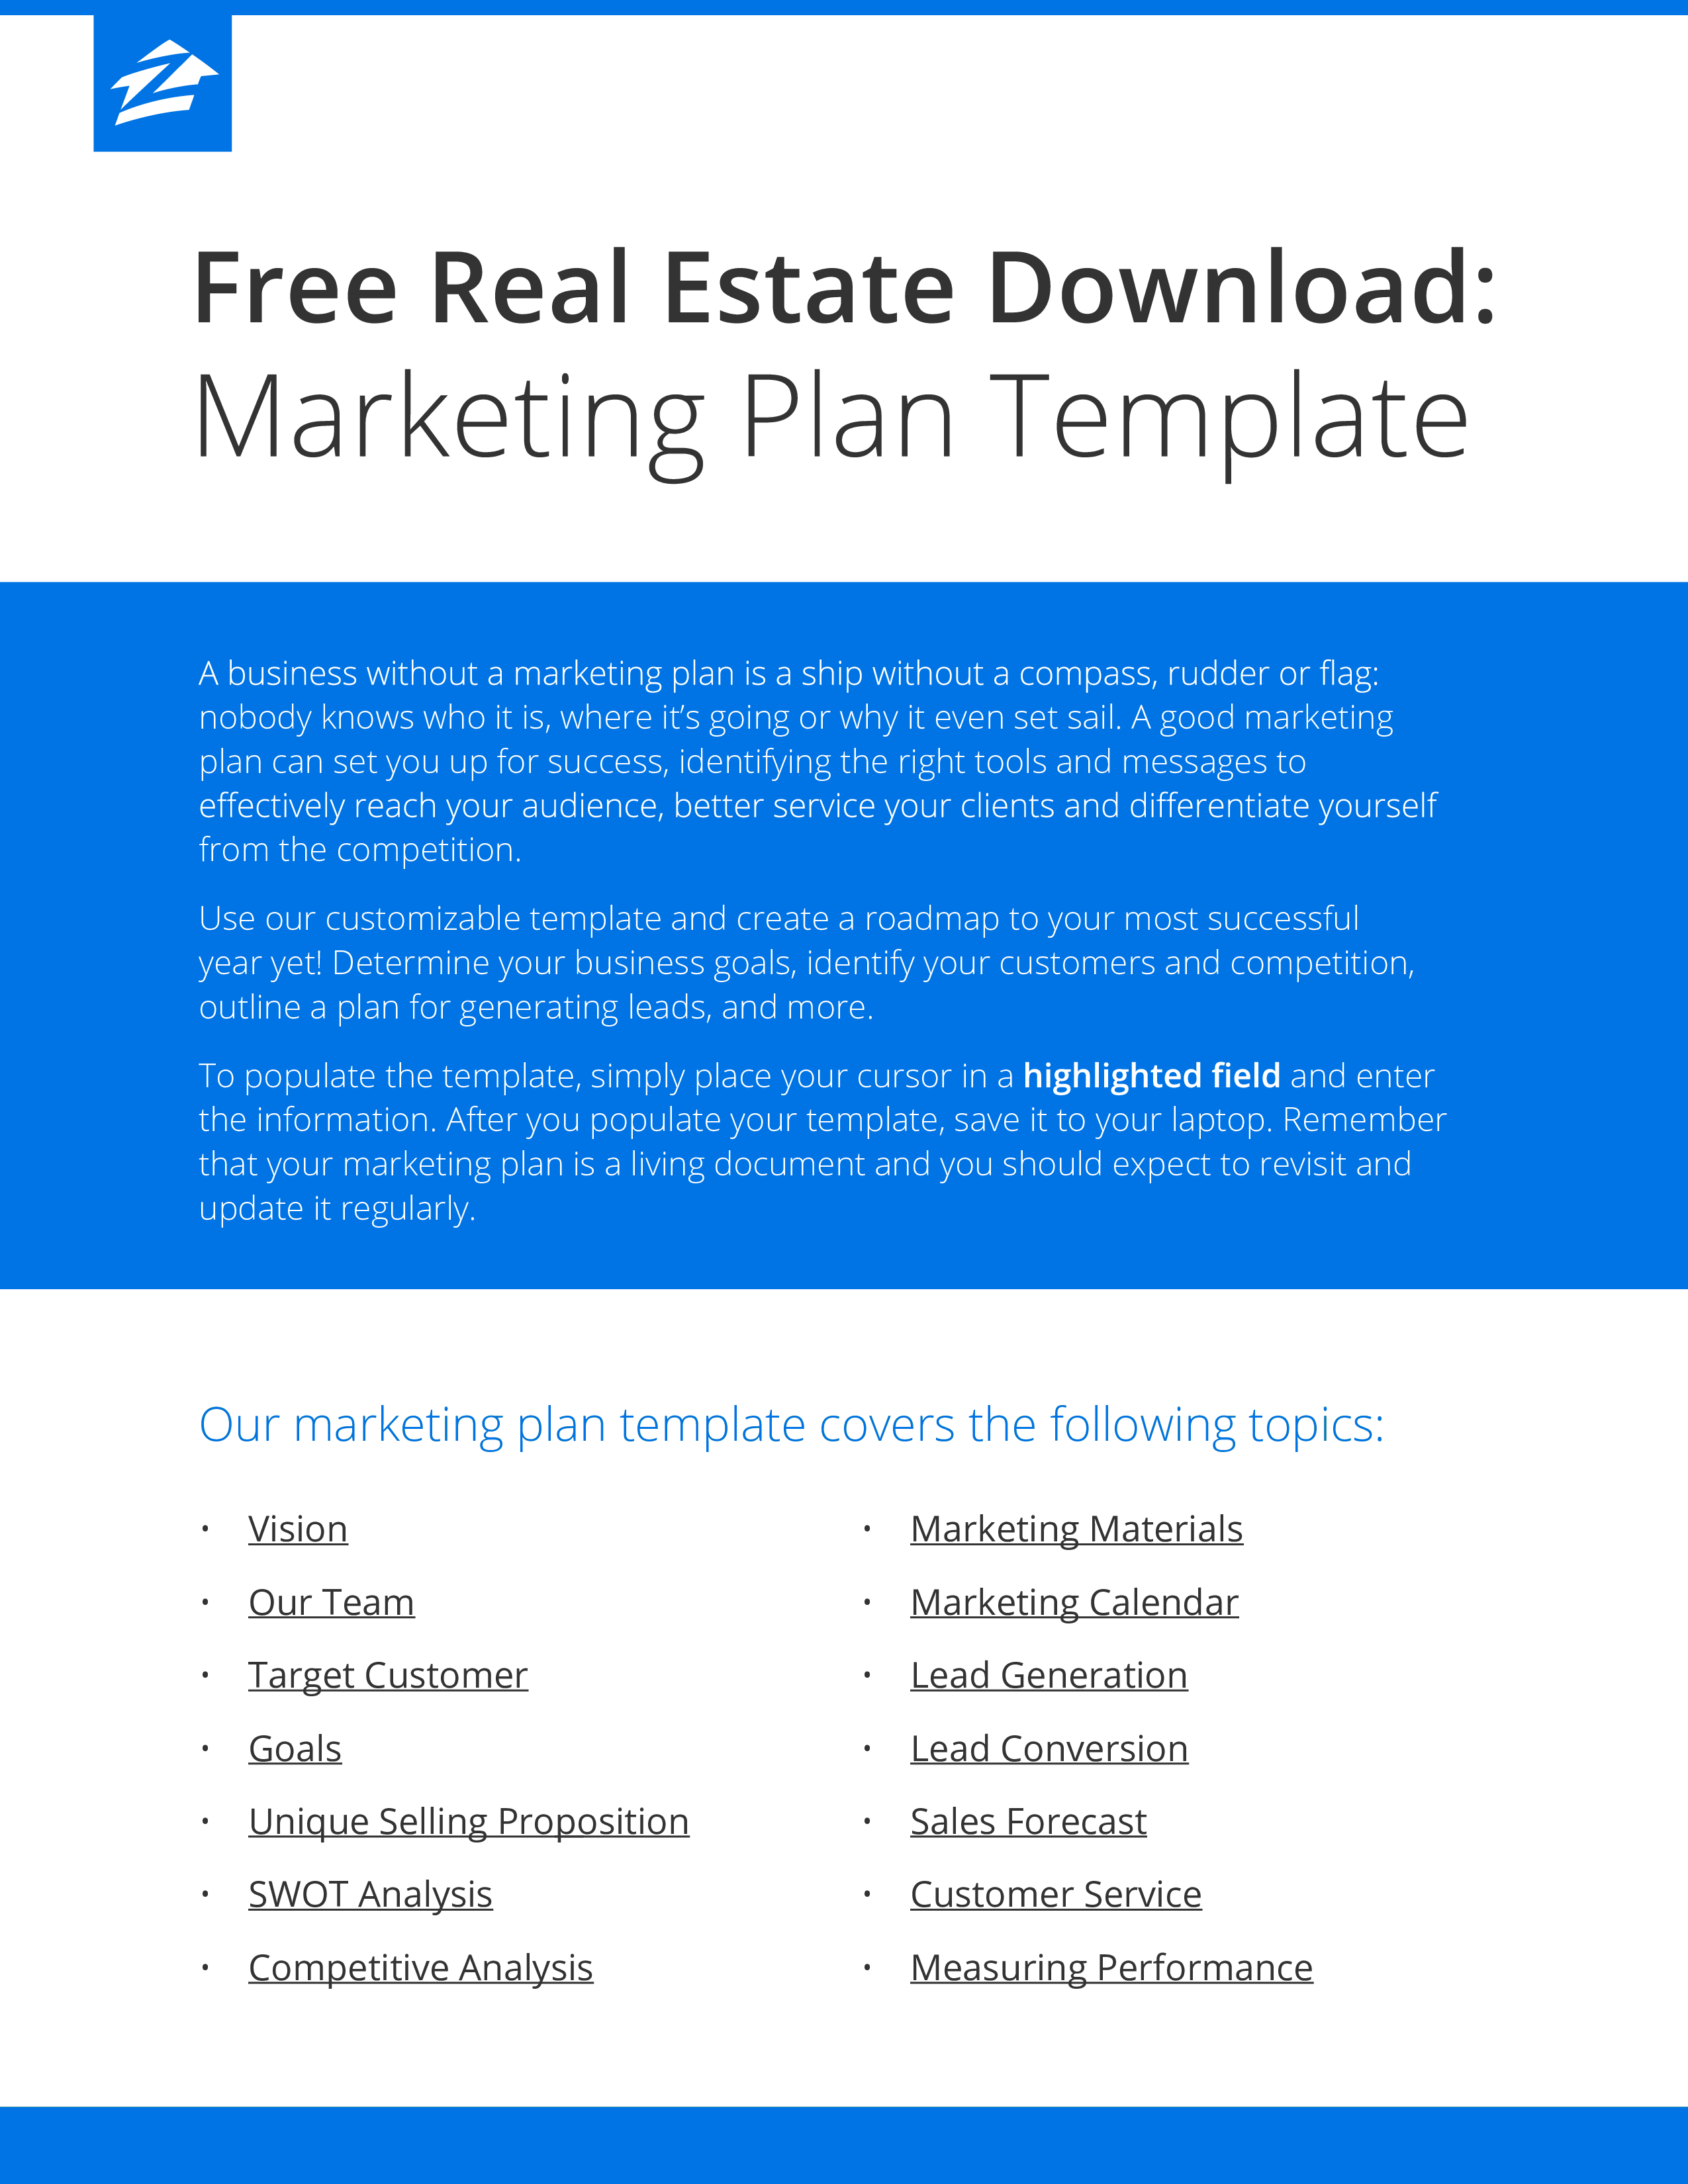 Real Estate Marketing Plan | Templates at allbusinesstemplates.com